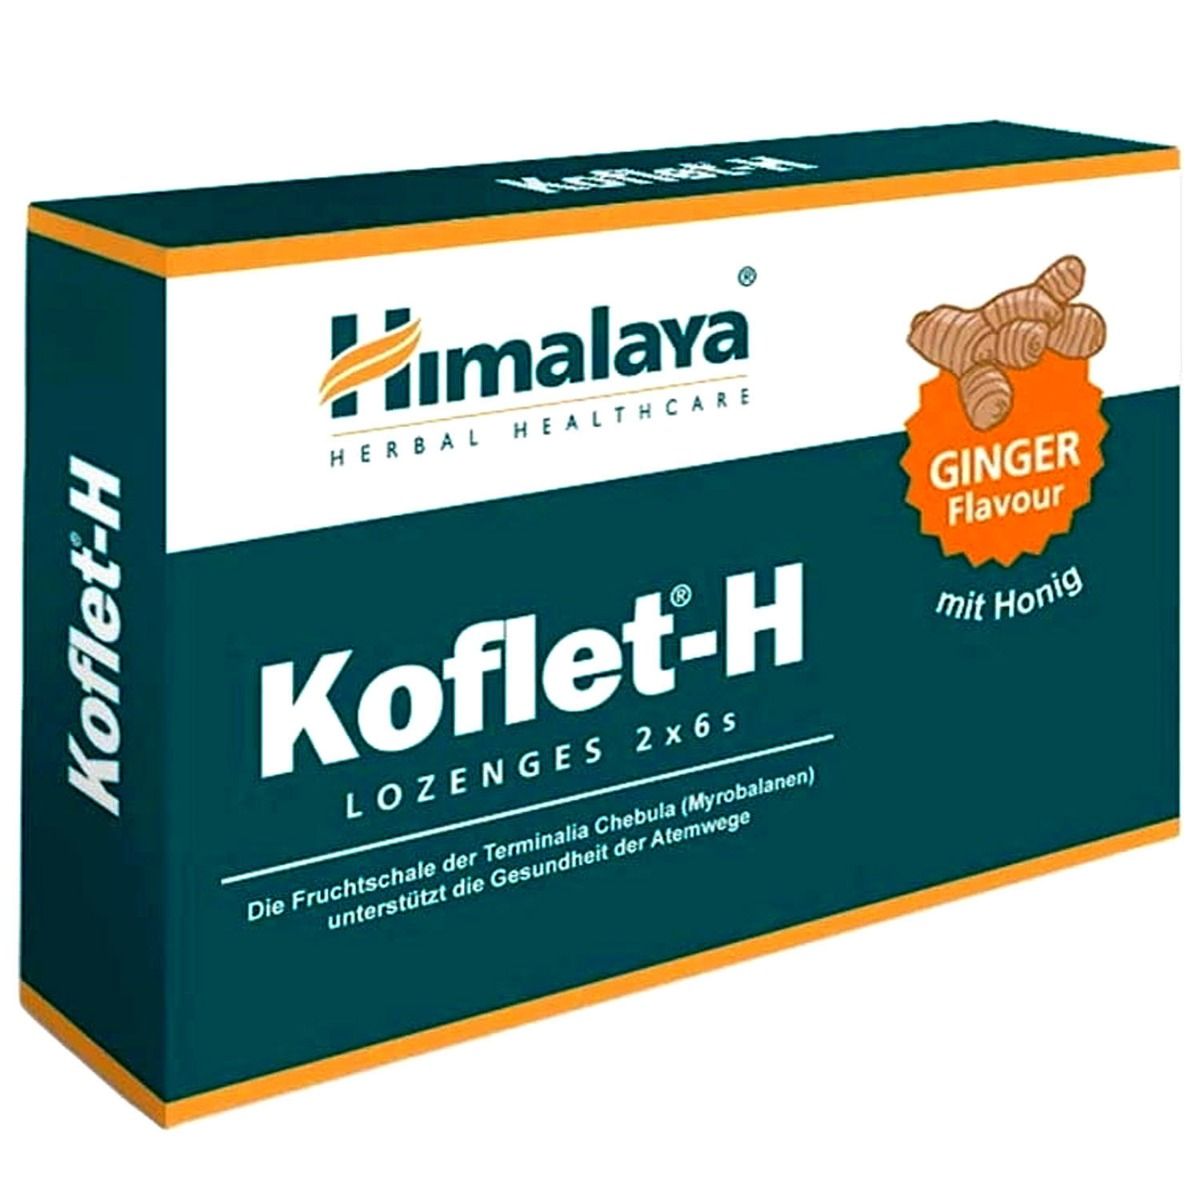 Buy Himalaya Koflet-H Ginger, 12 Lozenges Online